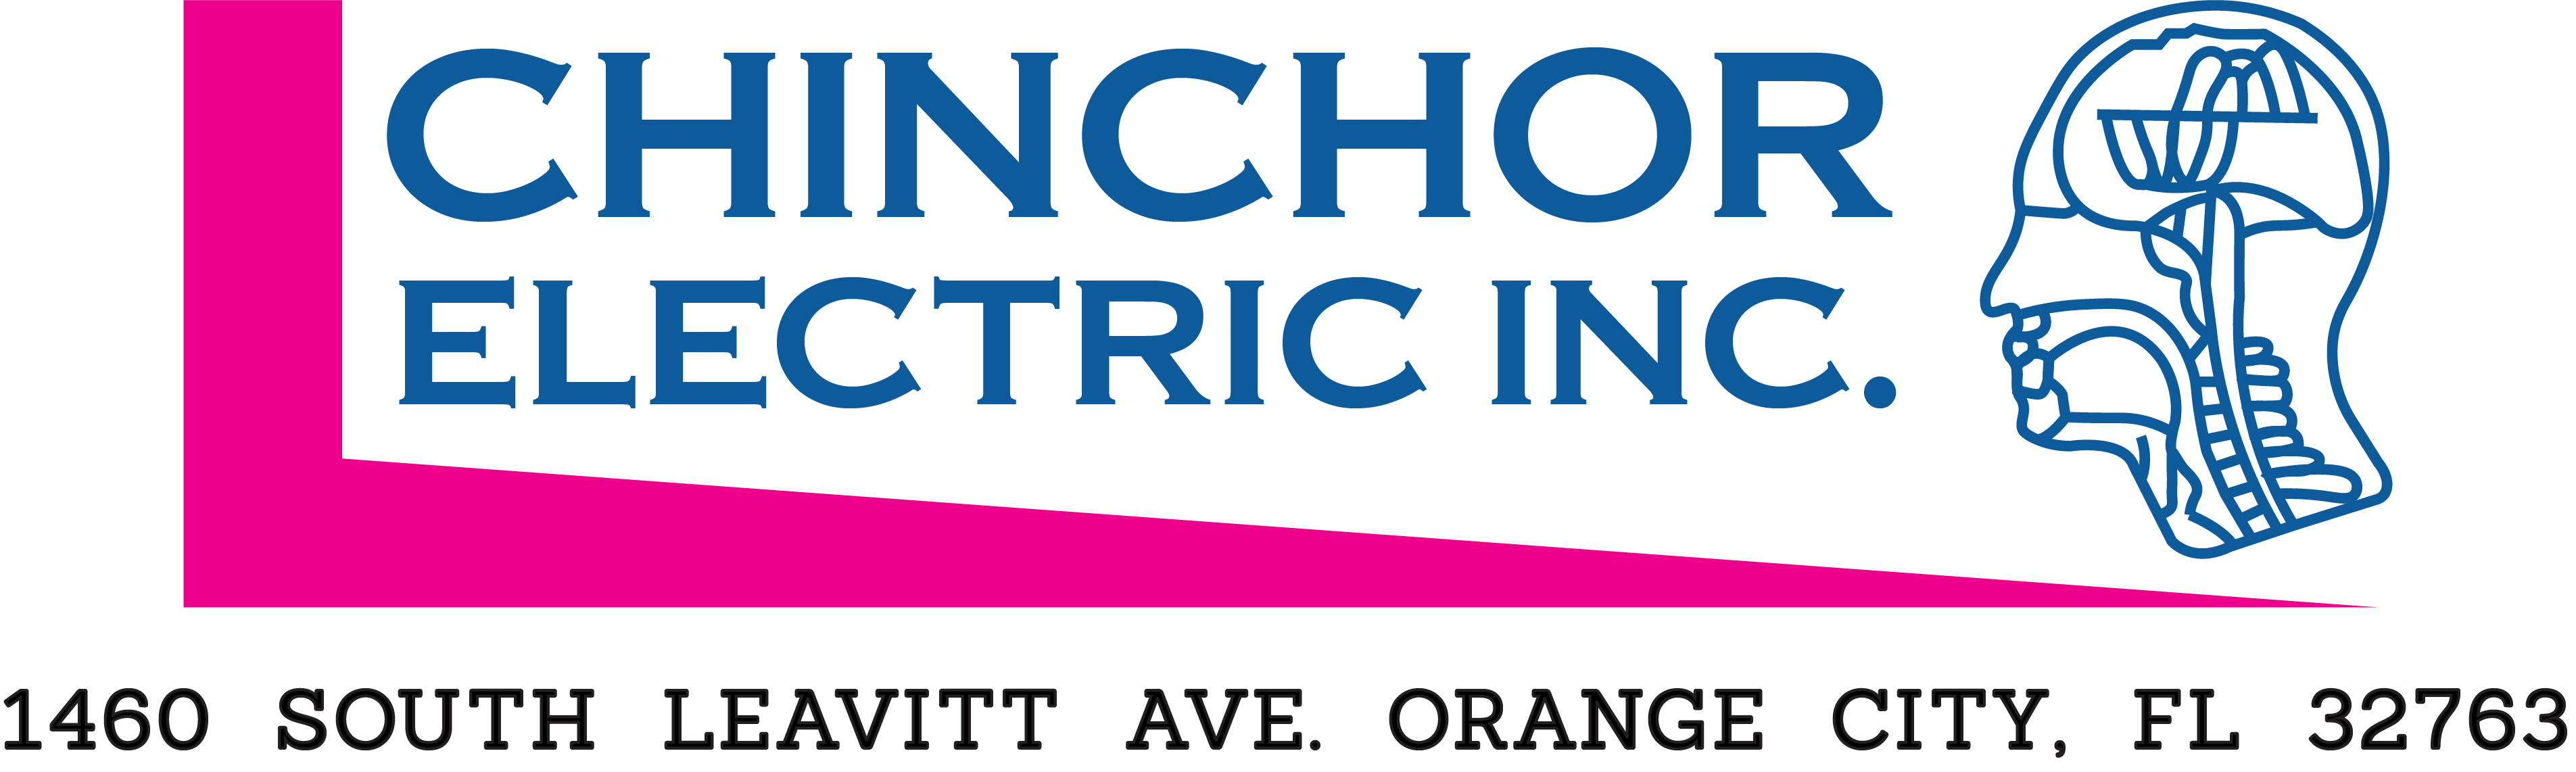 Chinchor Electric Inc.